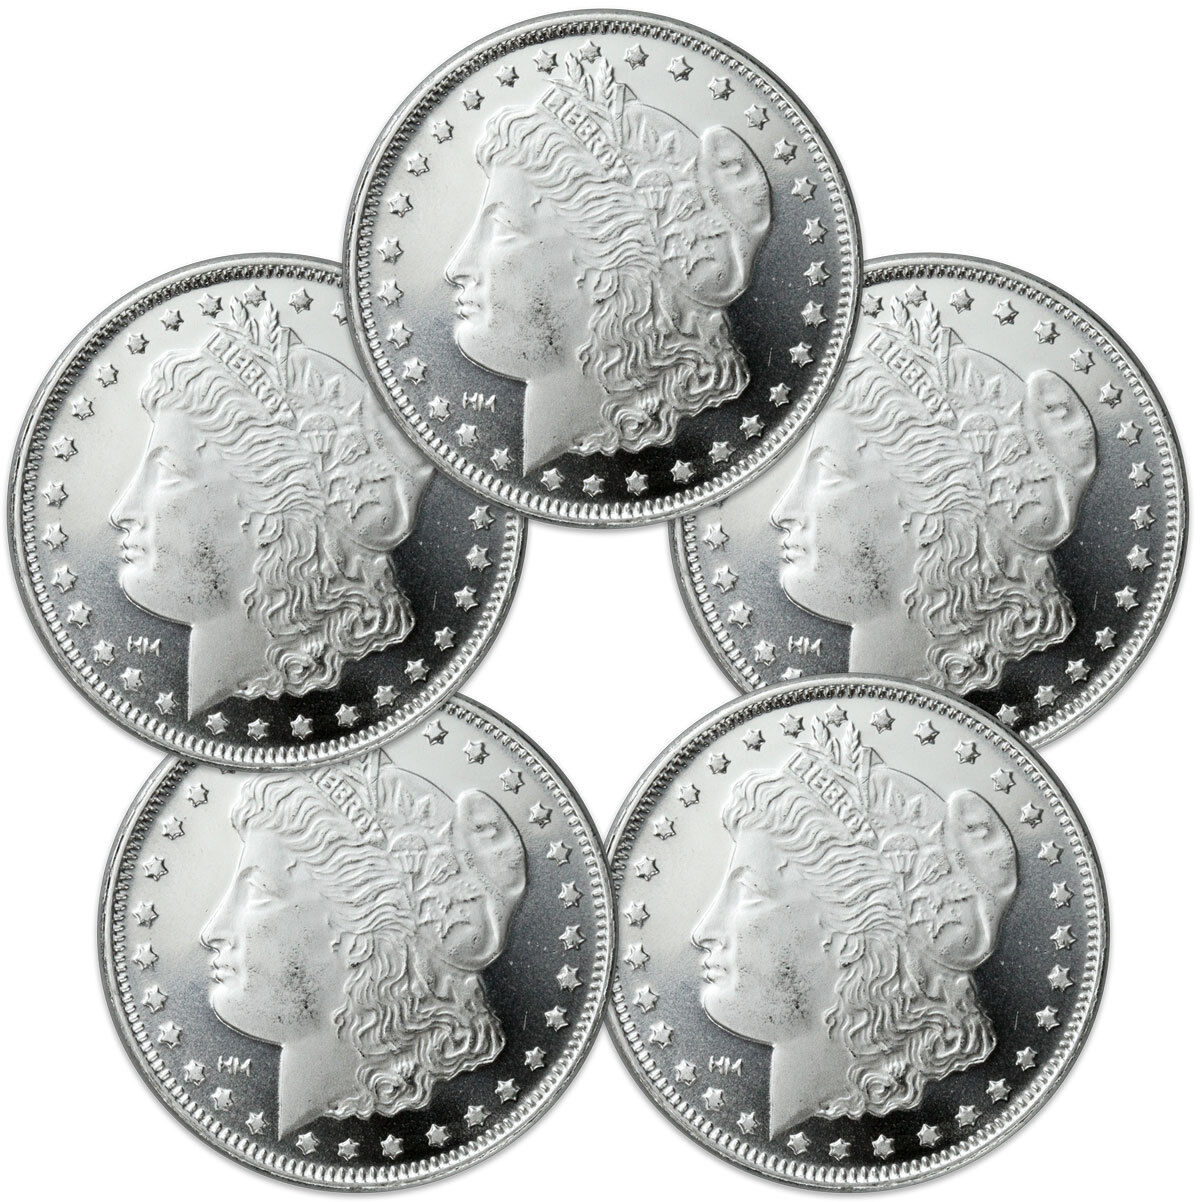 Lot of 5 - Morgan Dollar Design 1 oz .999 Silver Rounds SKU31047 